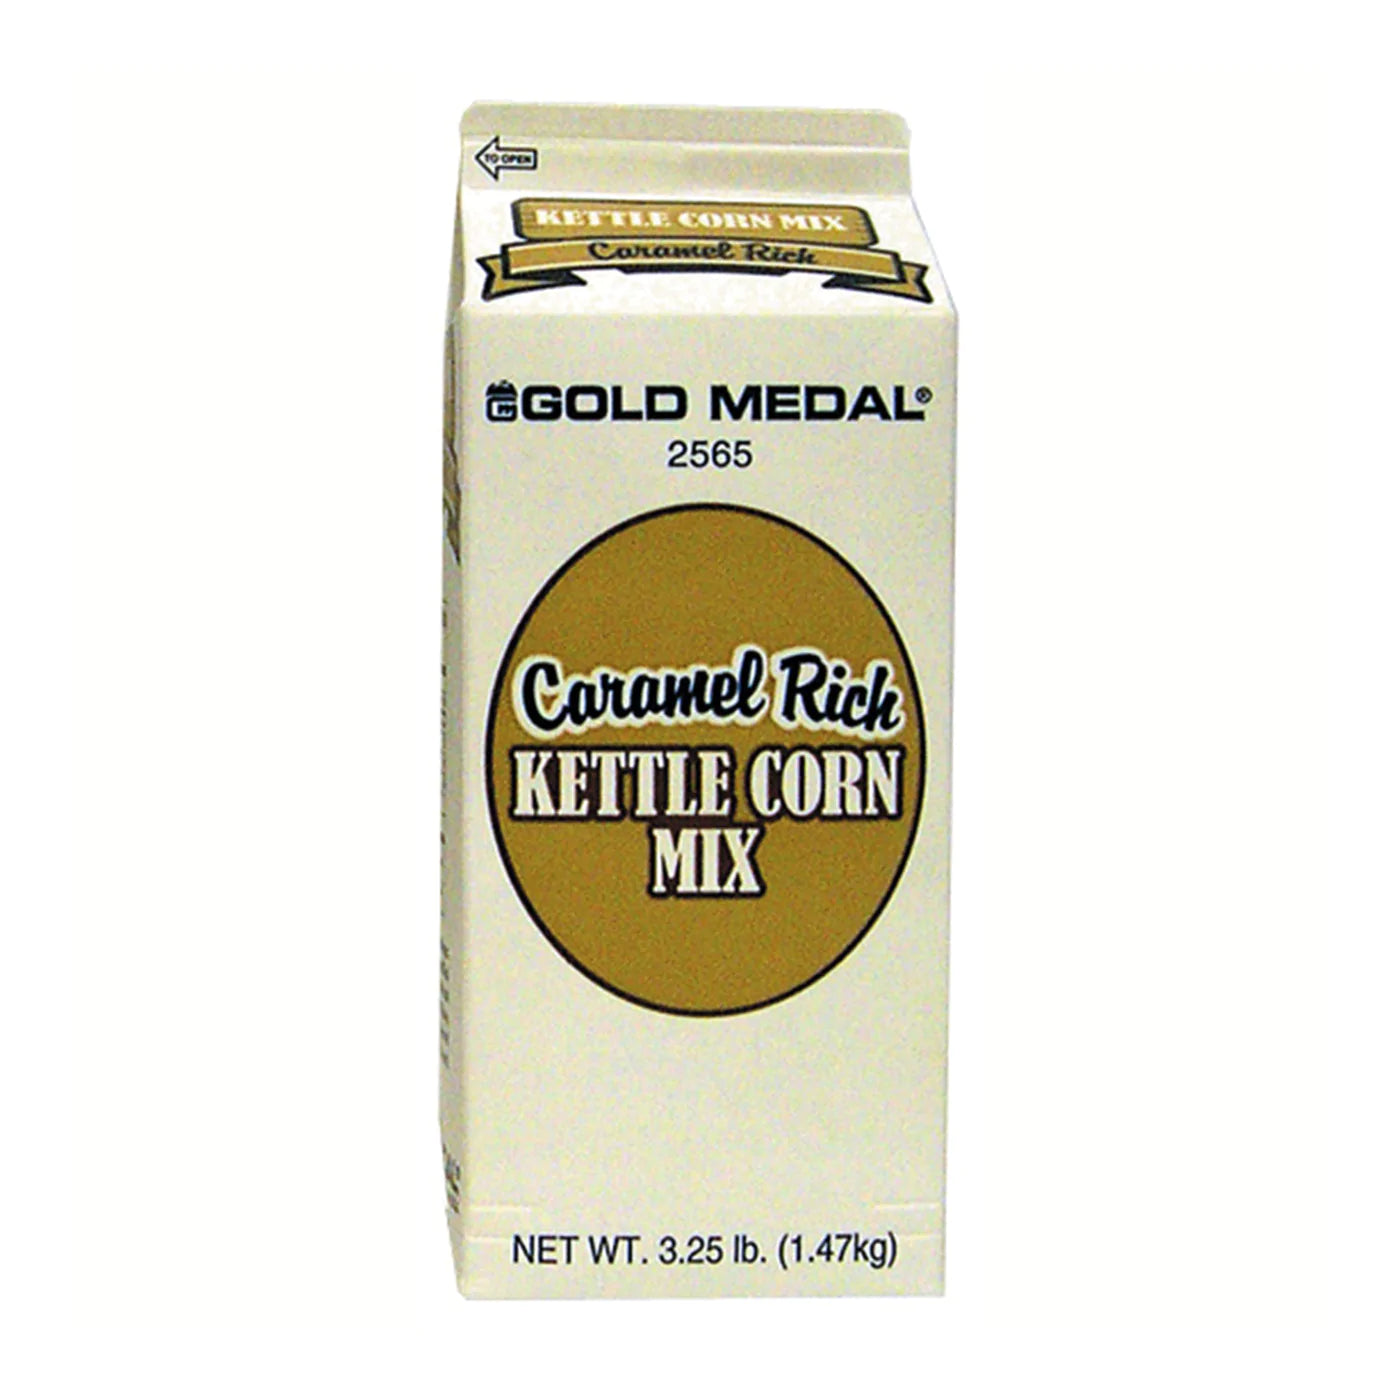 Gold Medal Caramel Rich Kettle Corn Mix, 3.25-lb. carton - Case Count: 6